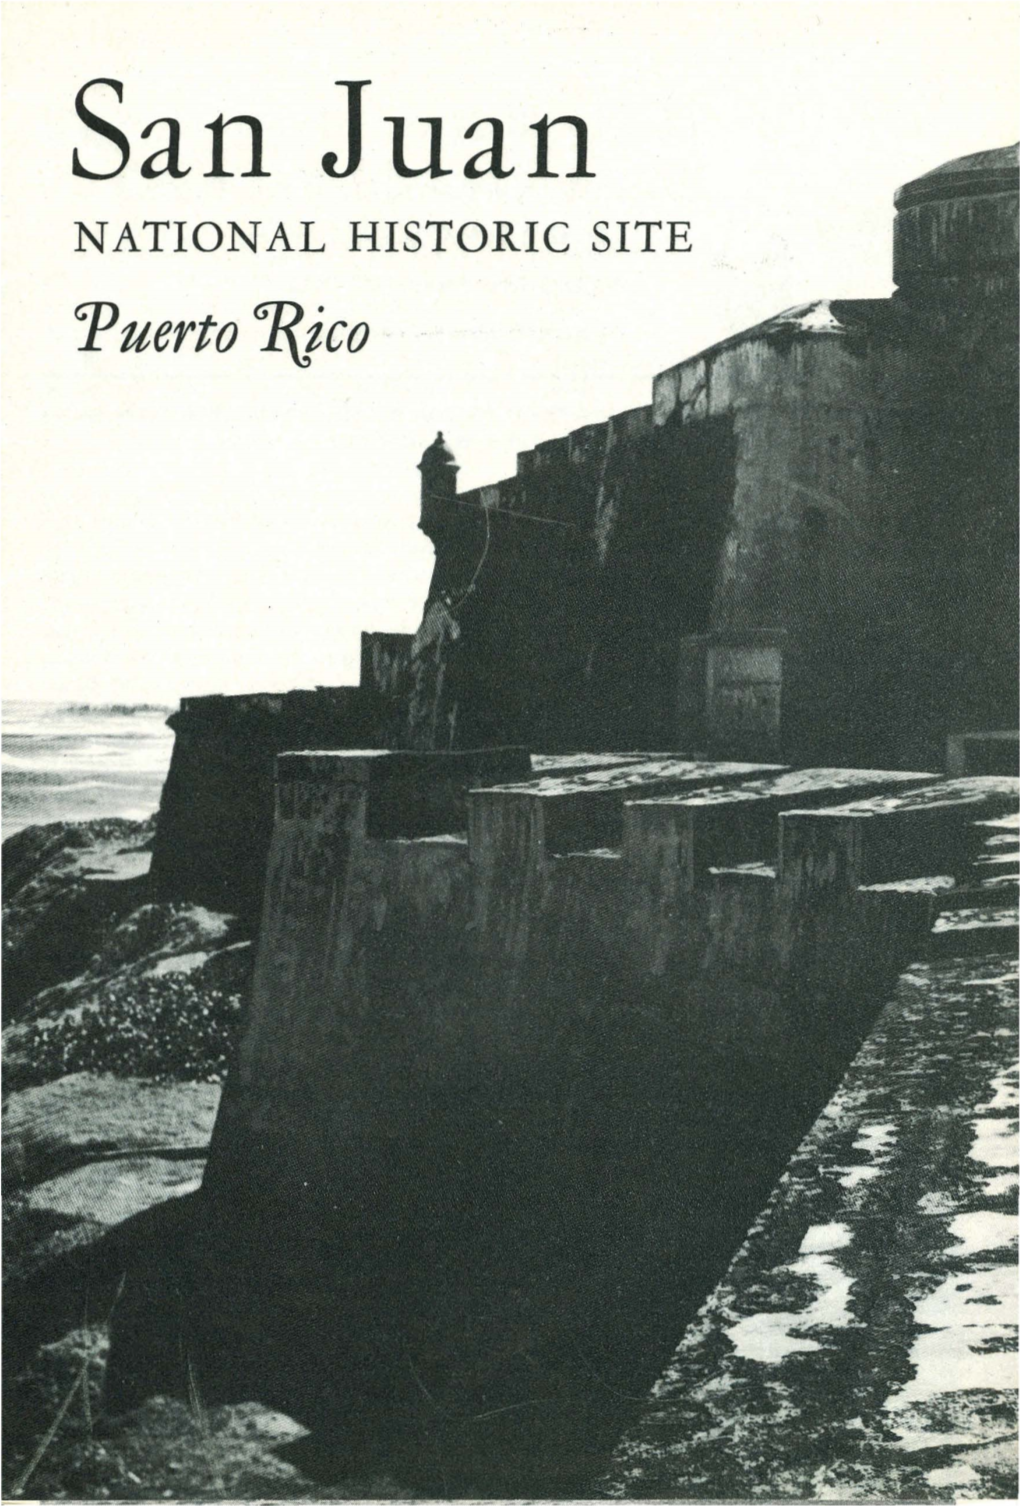 San Juan NATIONAL HISTORIC SITE Puerto 6Jvco San Juan NATIONAL Mstoric Site "\ O.R .,.,., {'F.;;J!:~